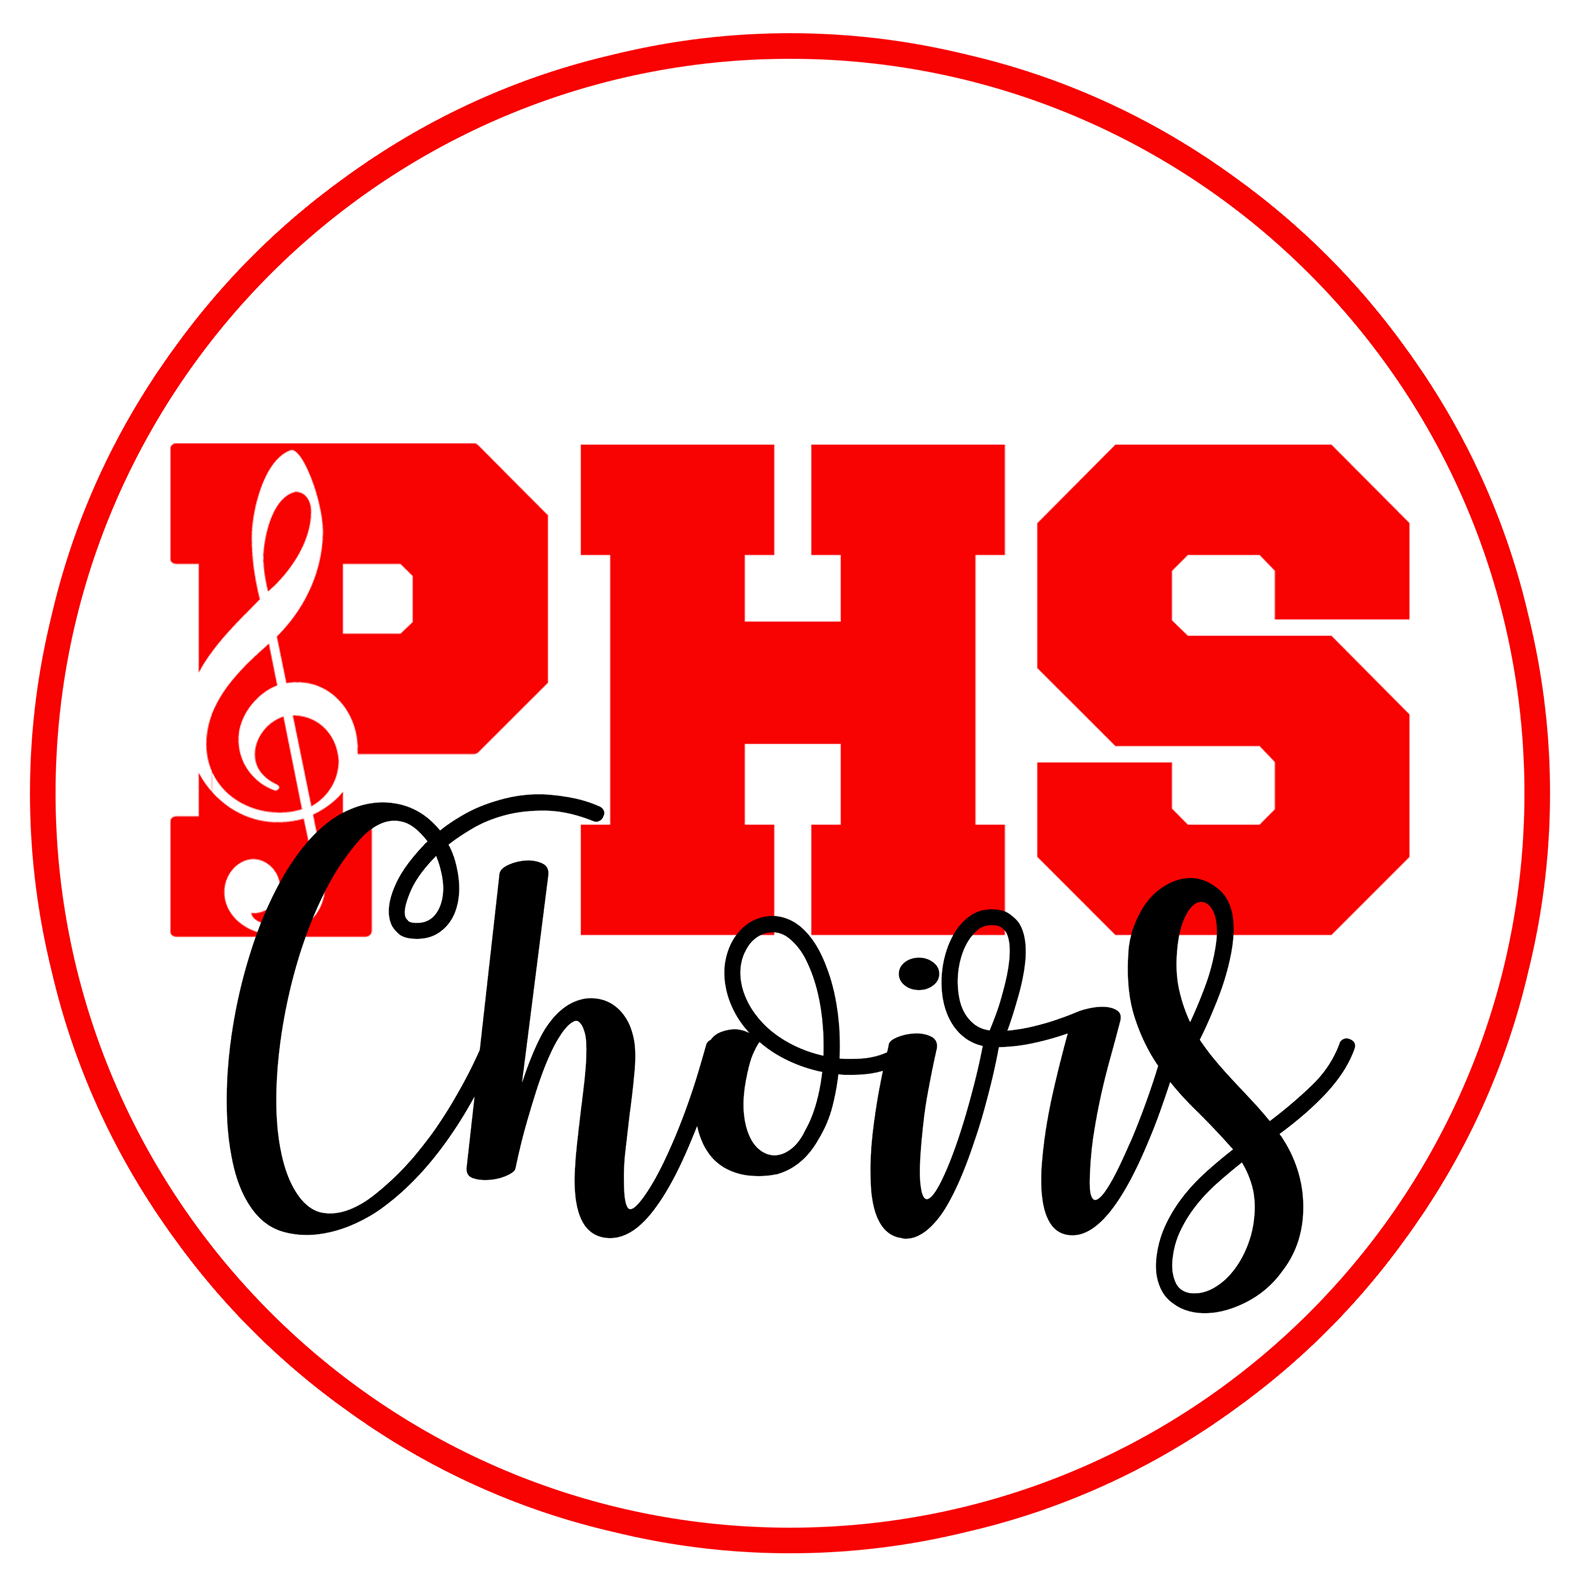 Plainfield Choirs